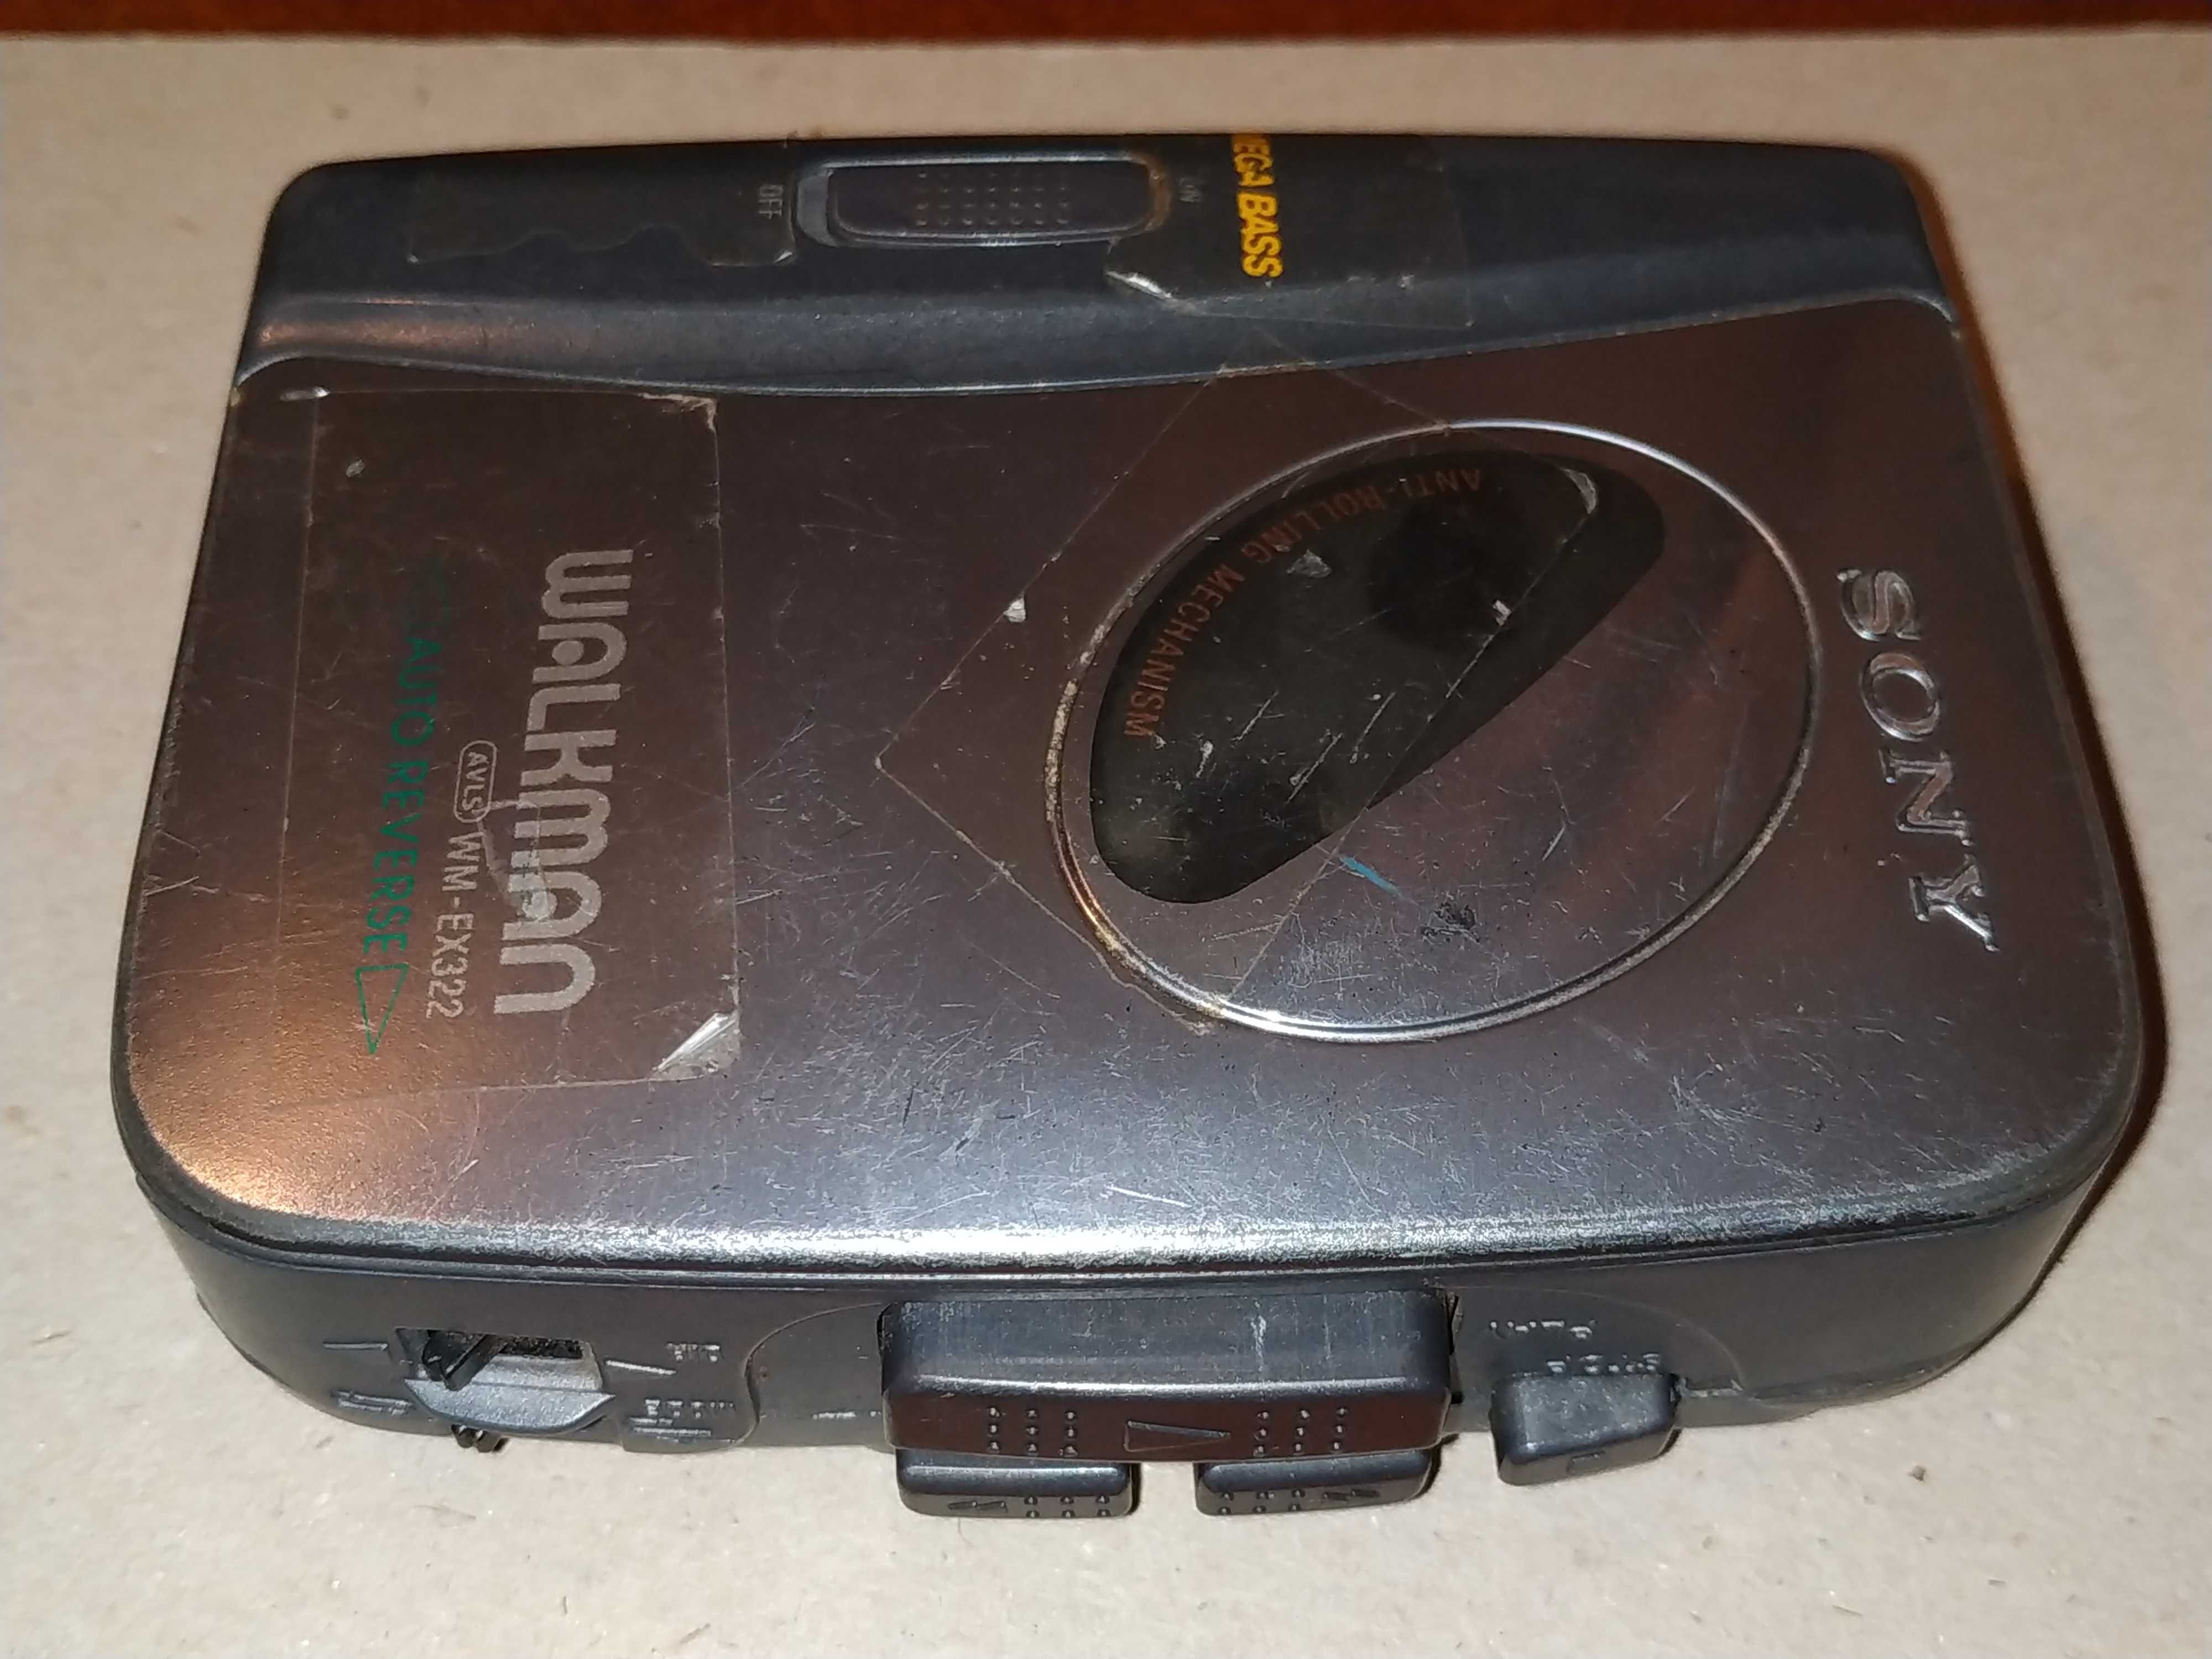 Sony Walkman WM-EX322 кассетный плеер для аудиокассет